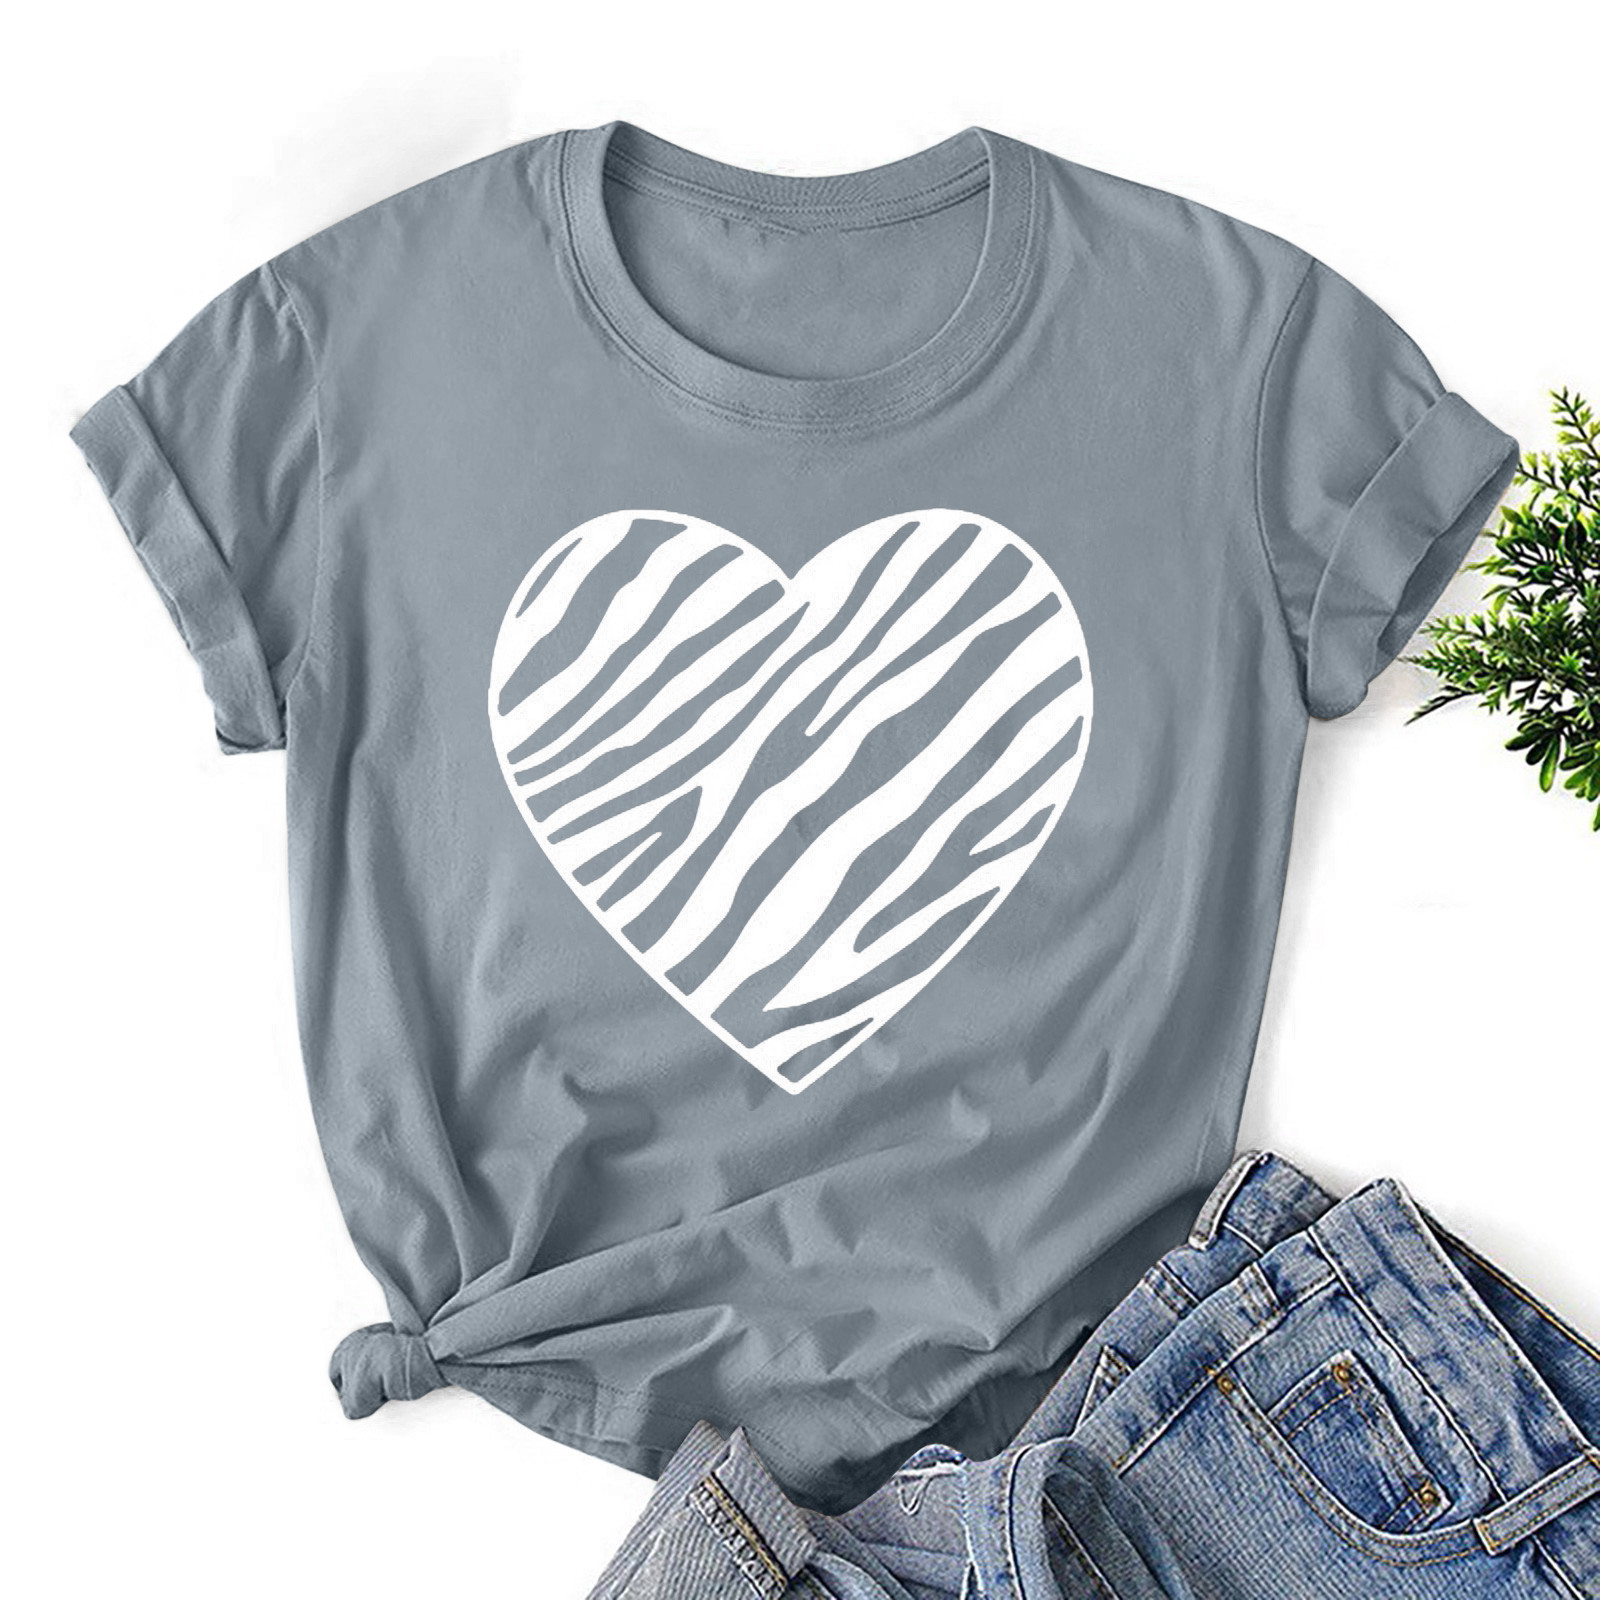 Daqian Heart Design Cute Graphic Novelty Valentines Day T shirt Womens ...